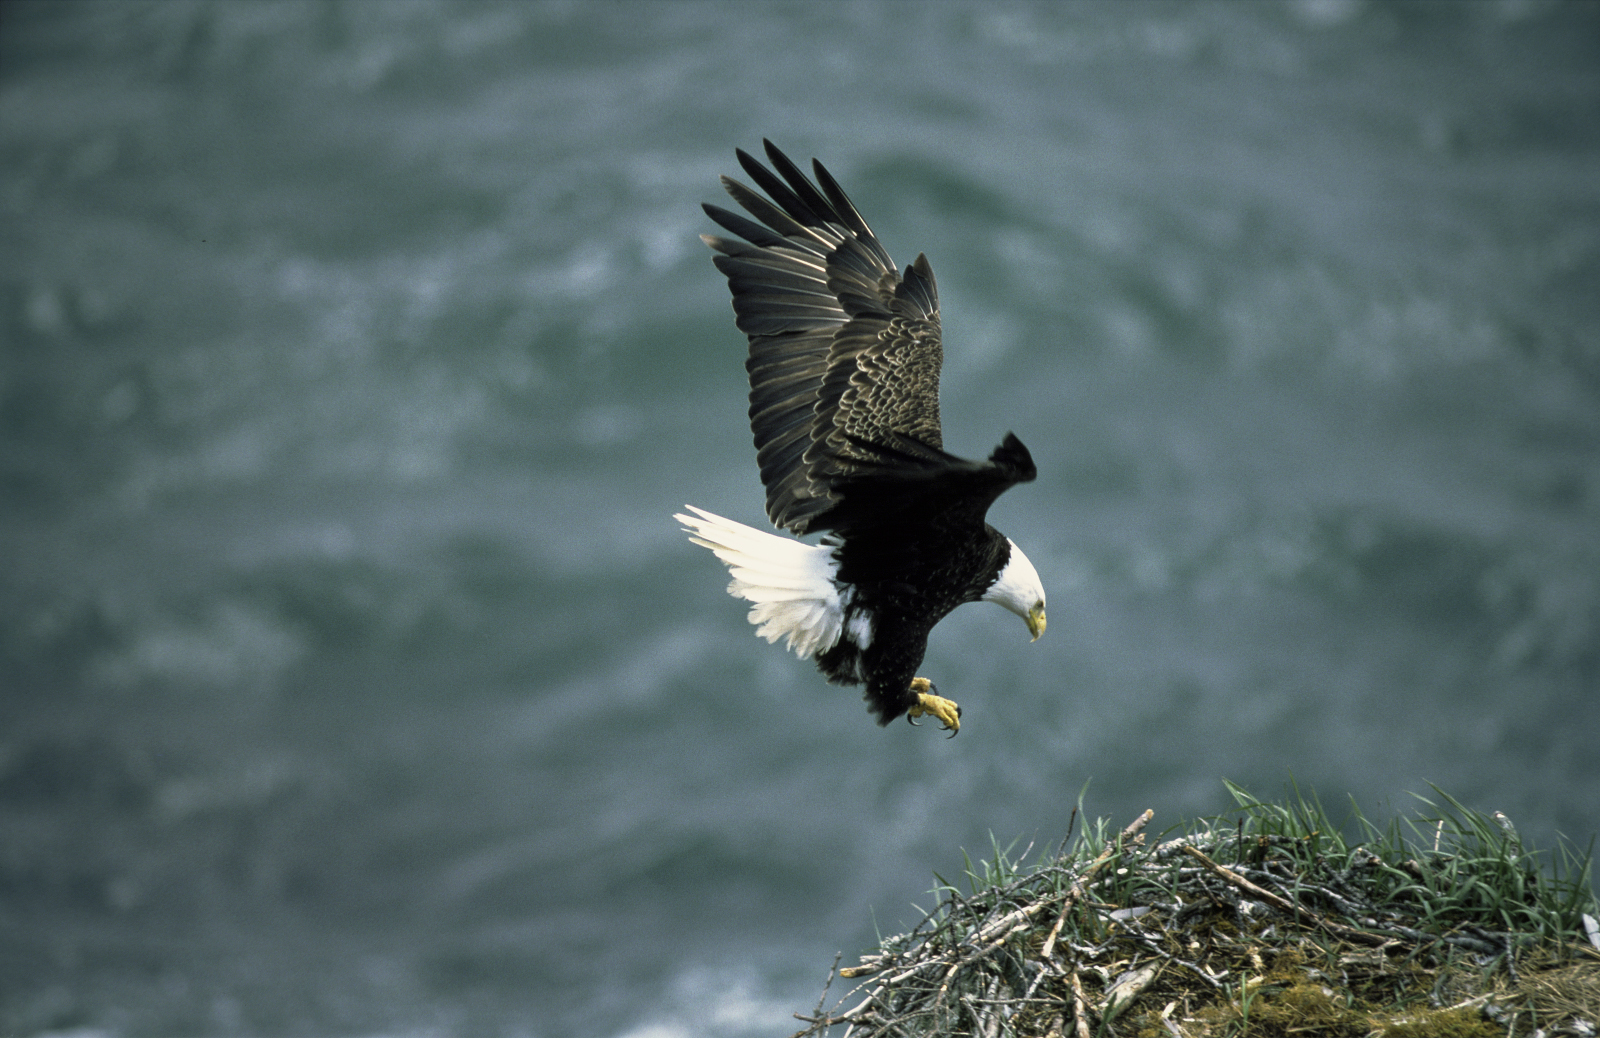 Bald eagle in nest - National Archives Identifier: 166705106